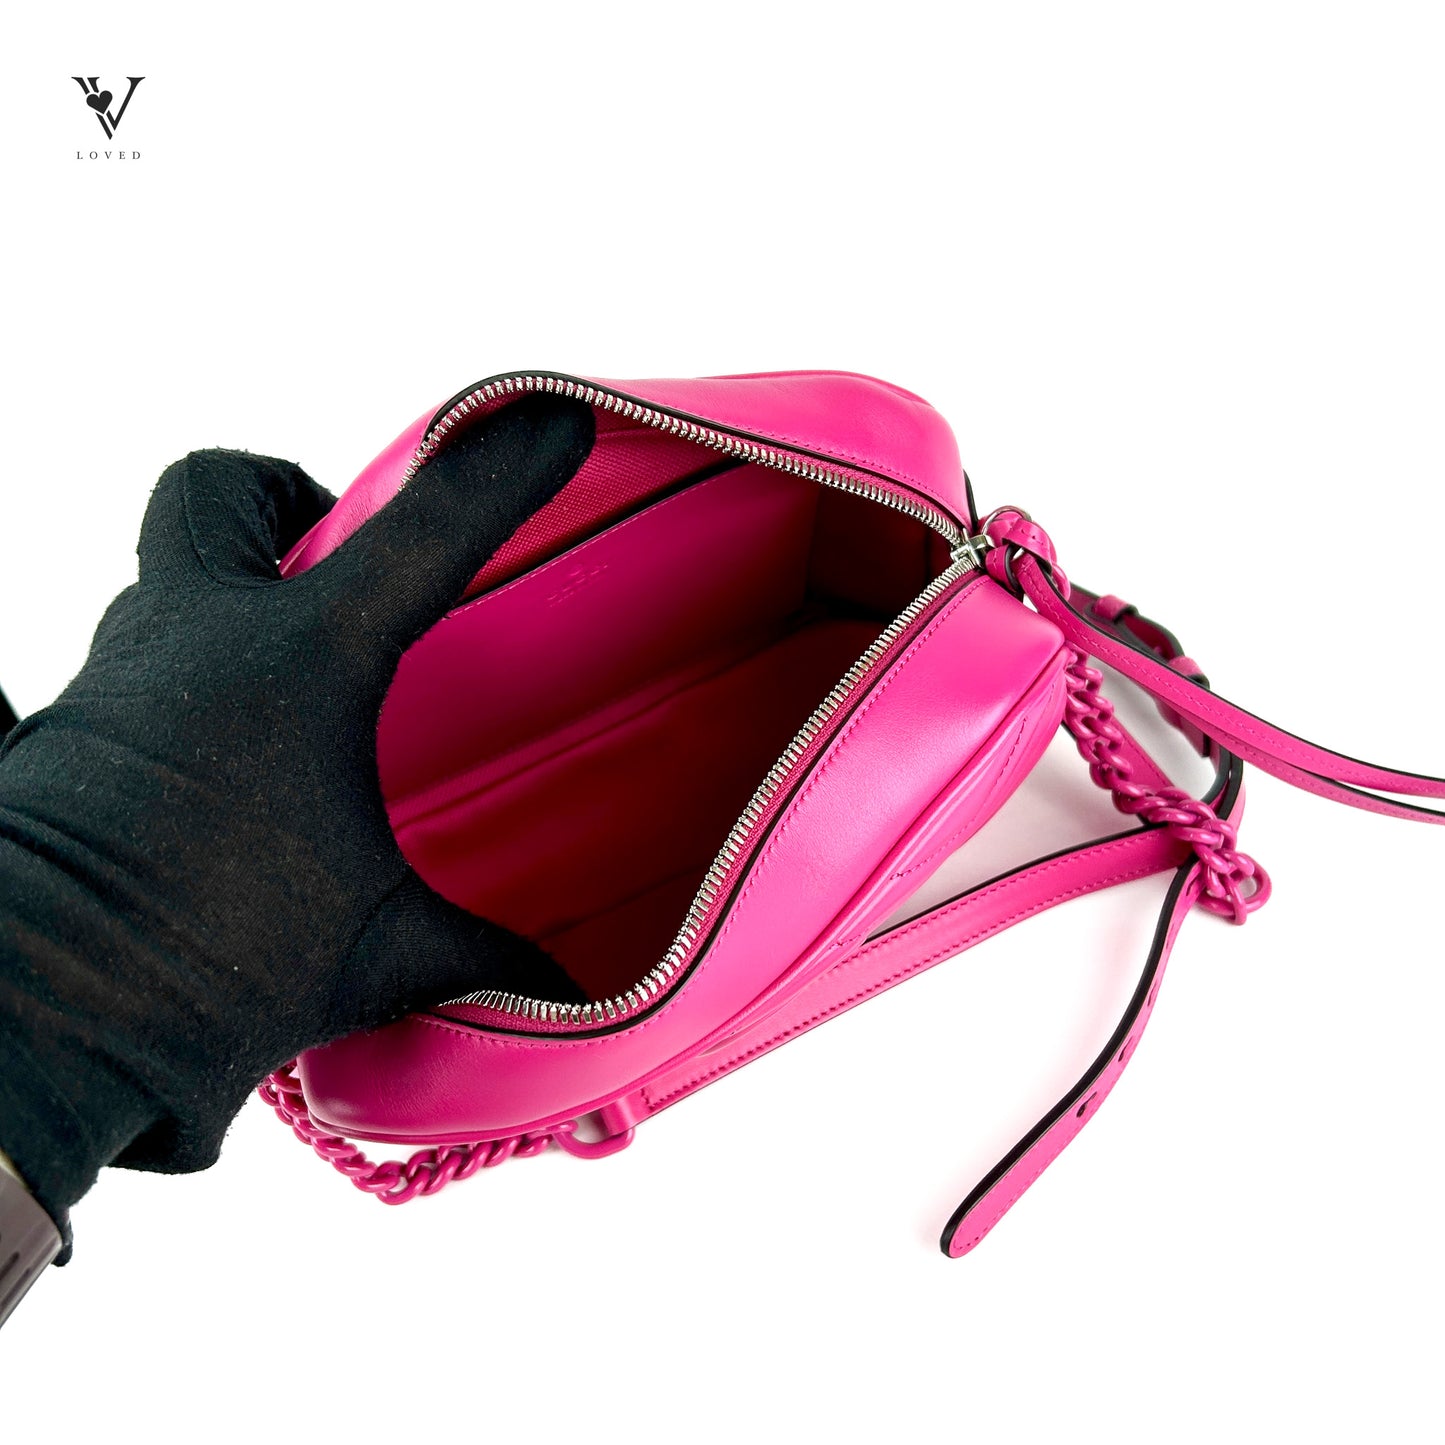 GG Marmont Matelassé Crossbody Bag  in Hot Pink Calfskin Leather